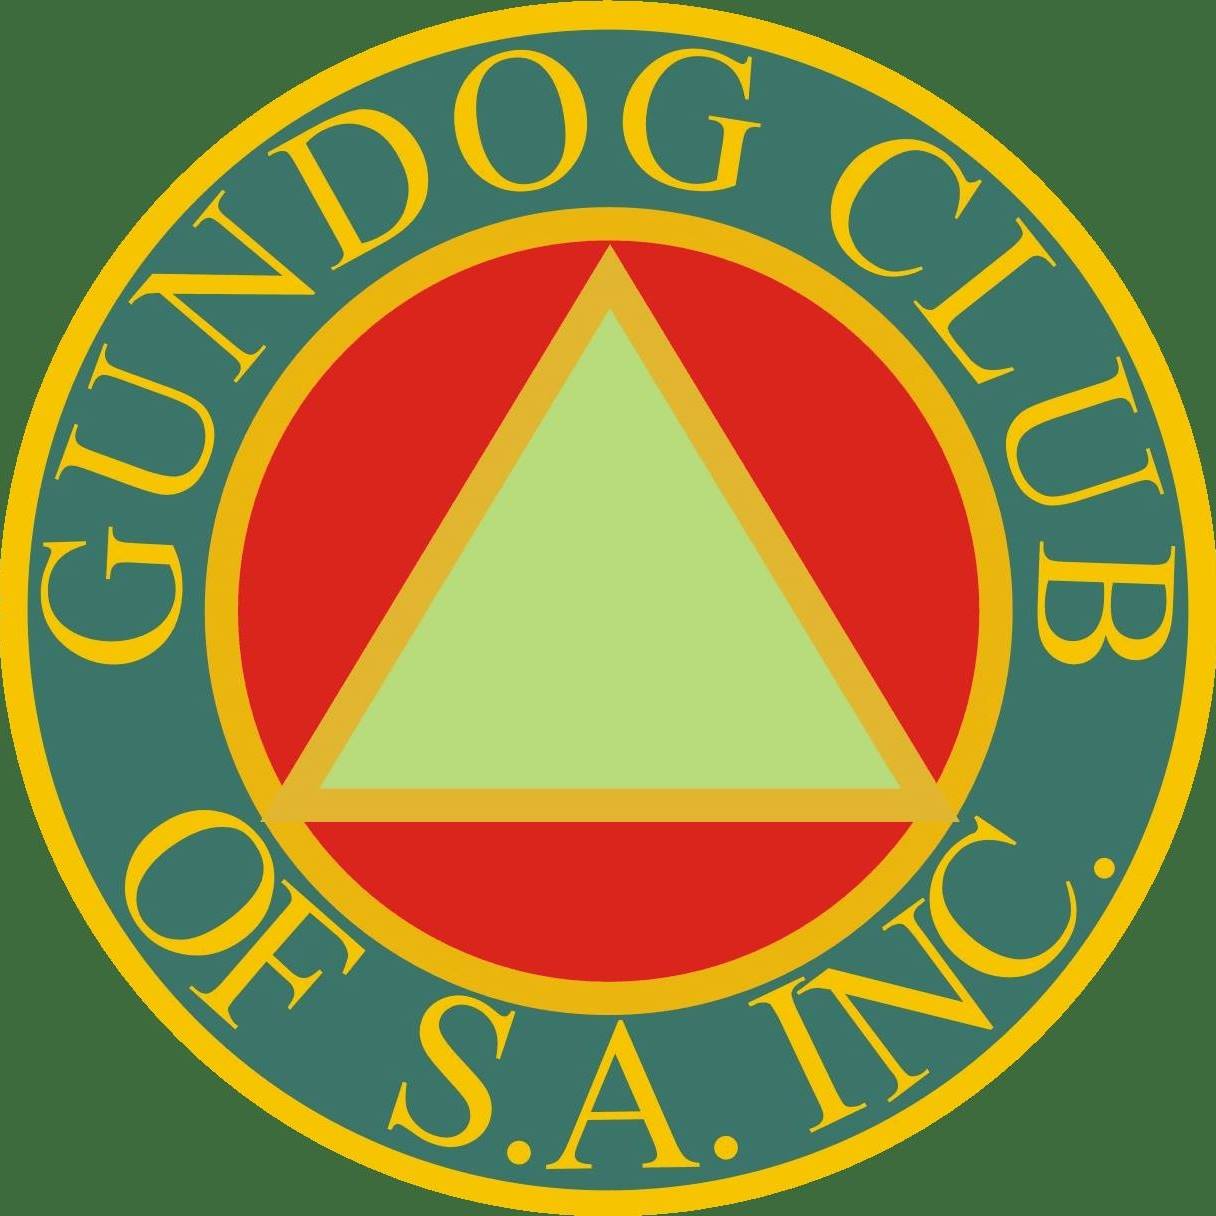 Gundog Club of SA Inc